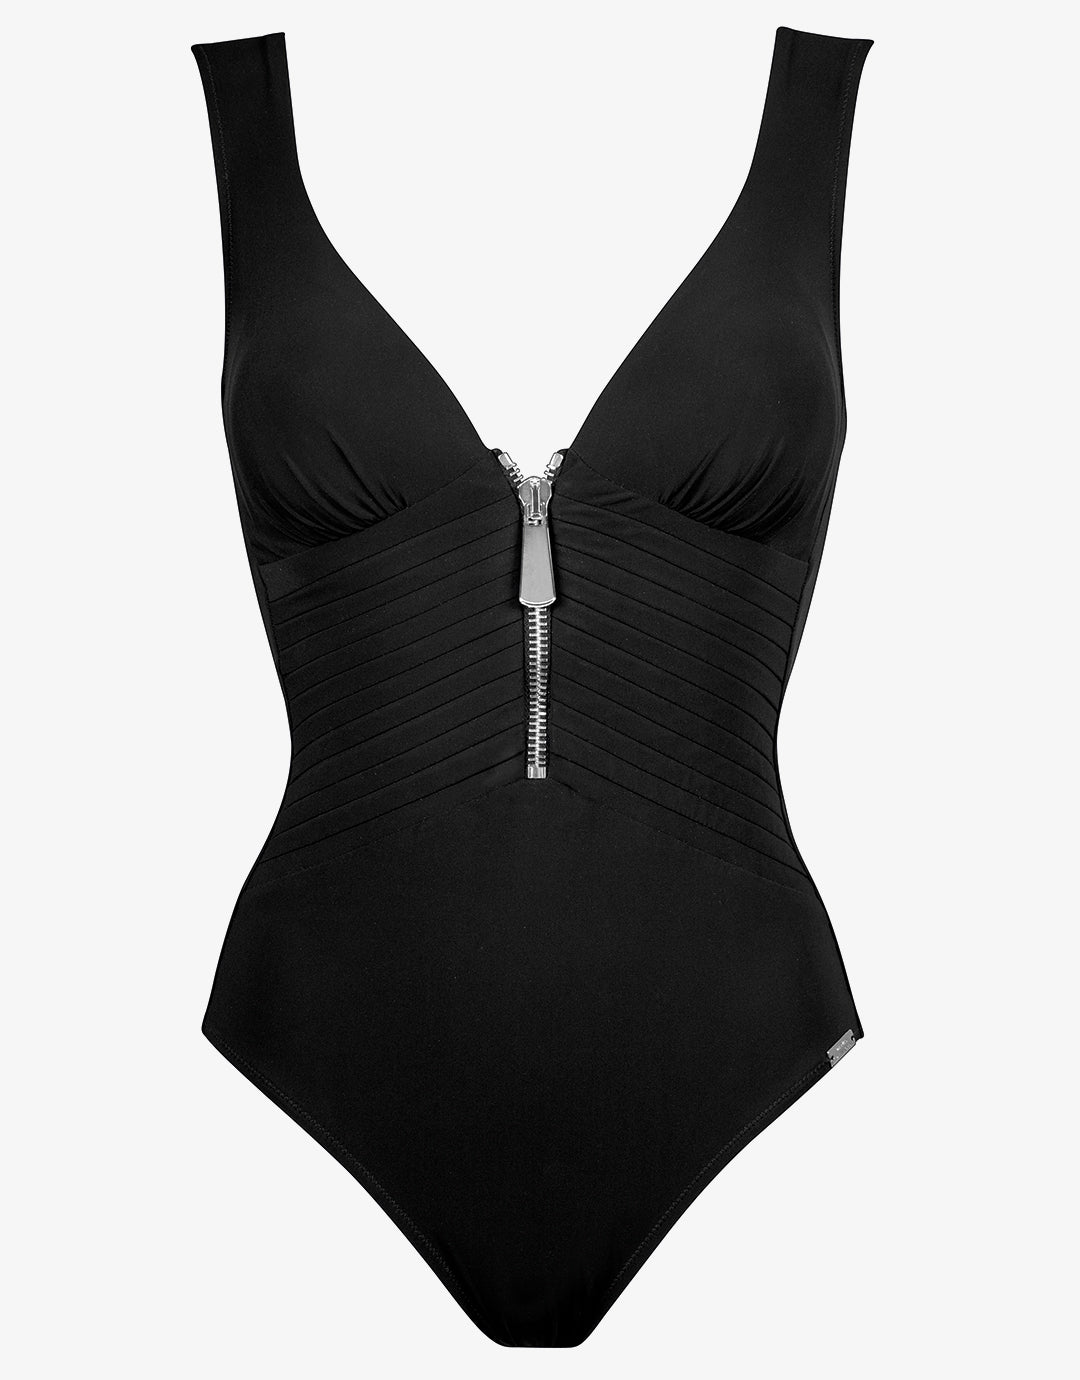 Blackout Swimsuit - Black - Simply Beach UK